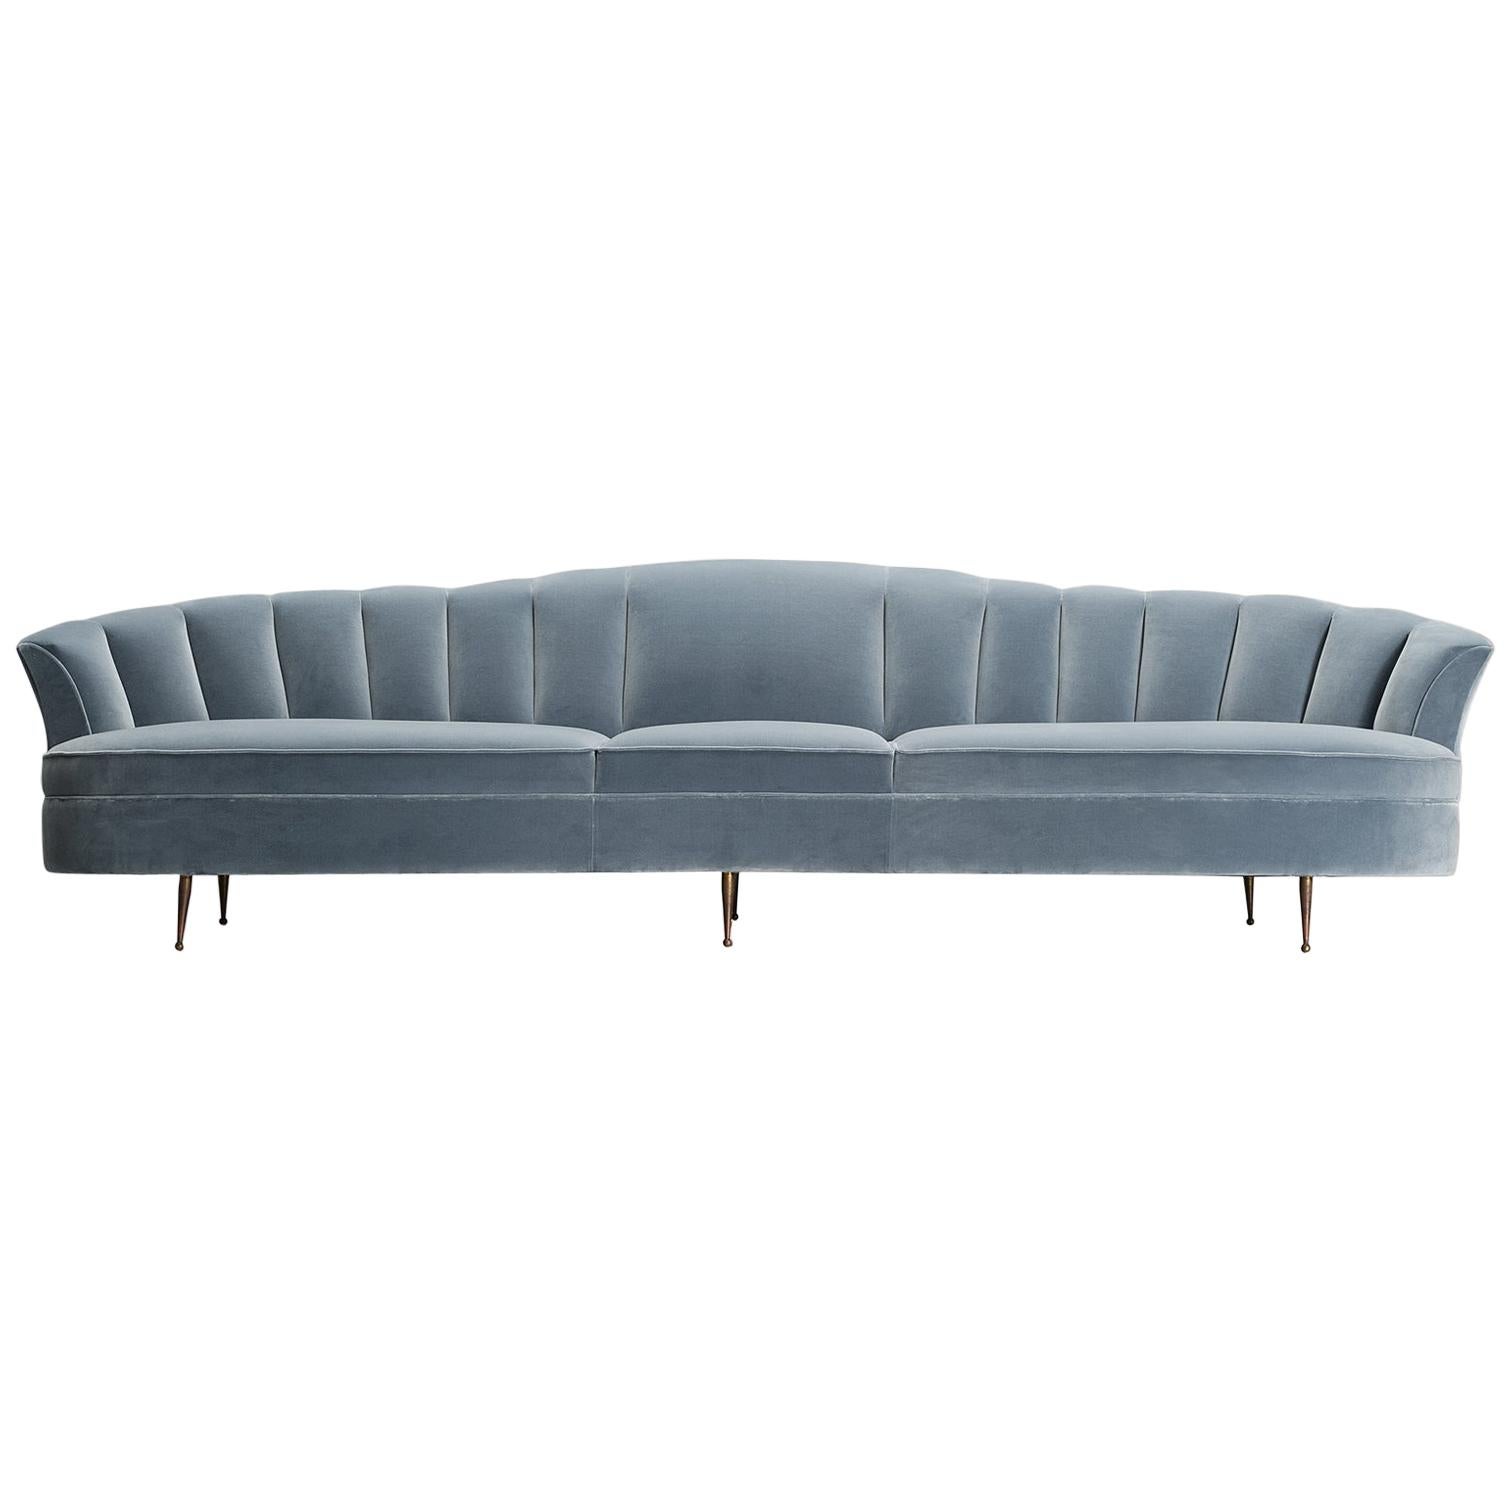 Large Italian Customizable Sofa in Elegant Shape